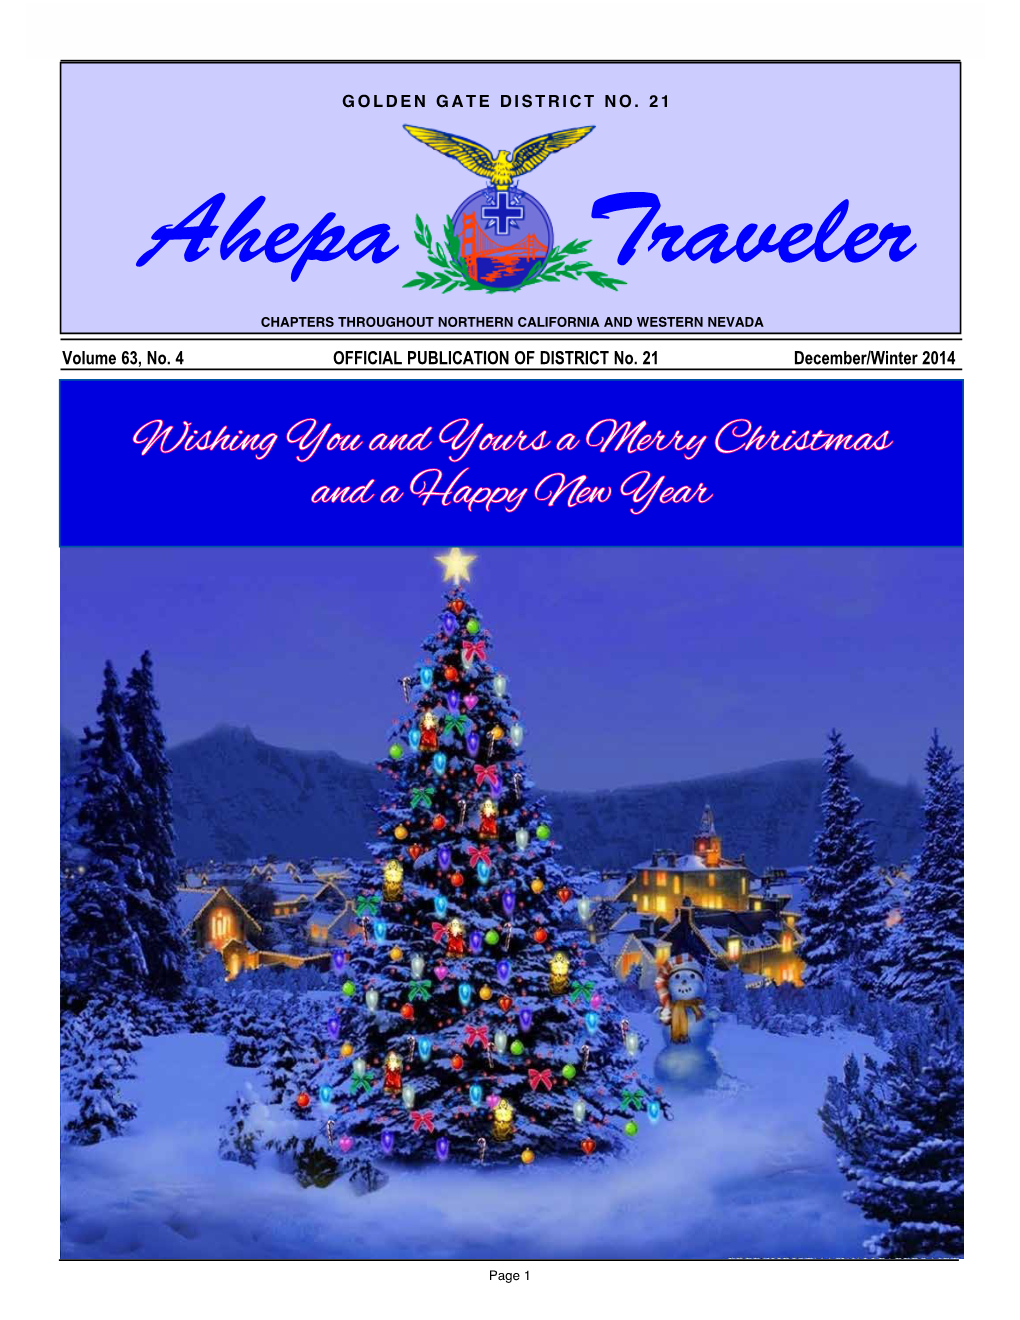 AHEPA TRAVELER December/Winter 2014